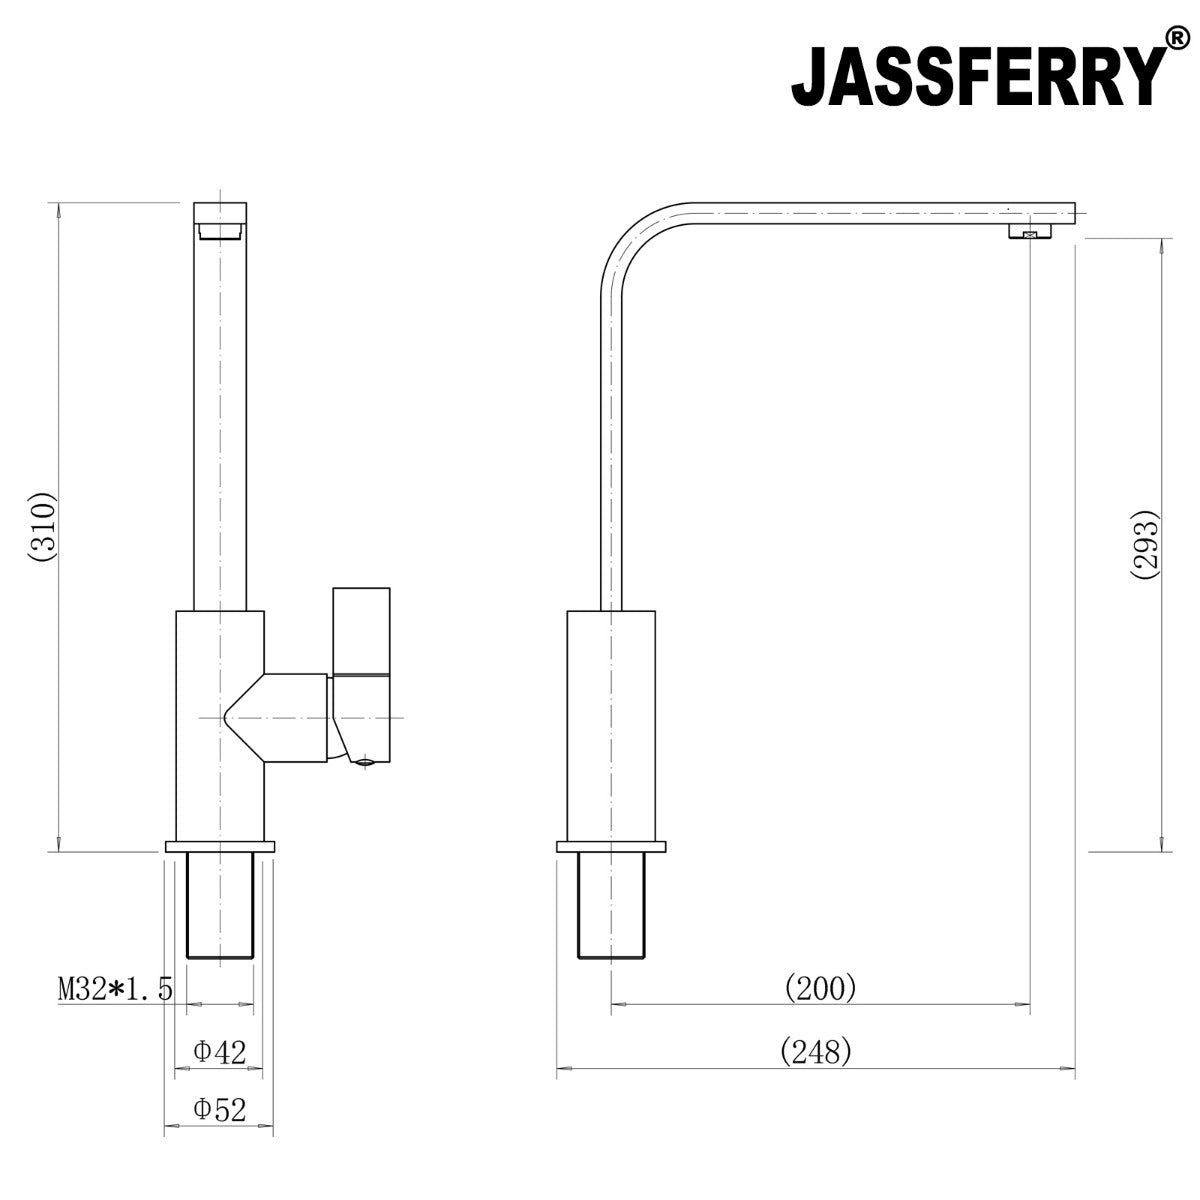 JassferryJASSFERRY Square Kitchen Sink Mixer Taps Chrome Modern Single Rectangle LeverKitchen taps